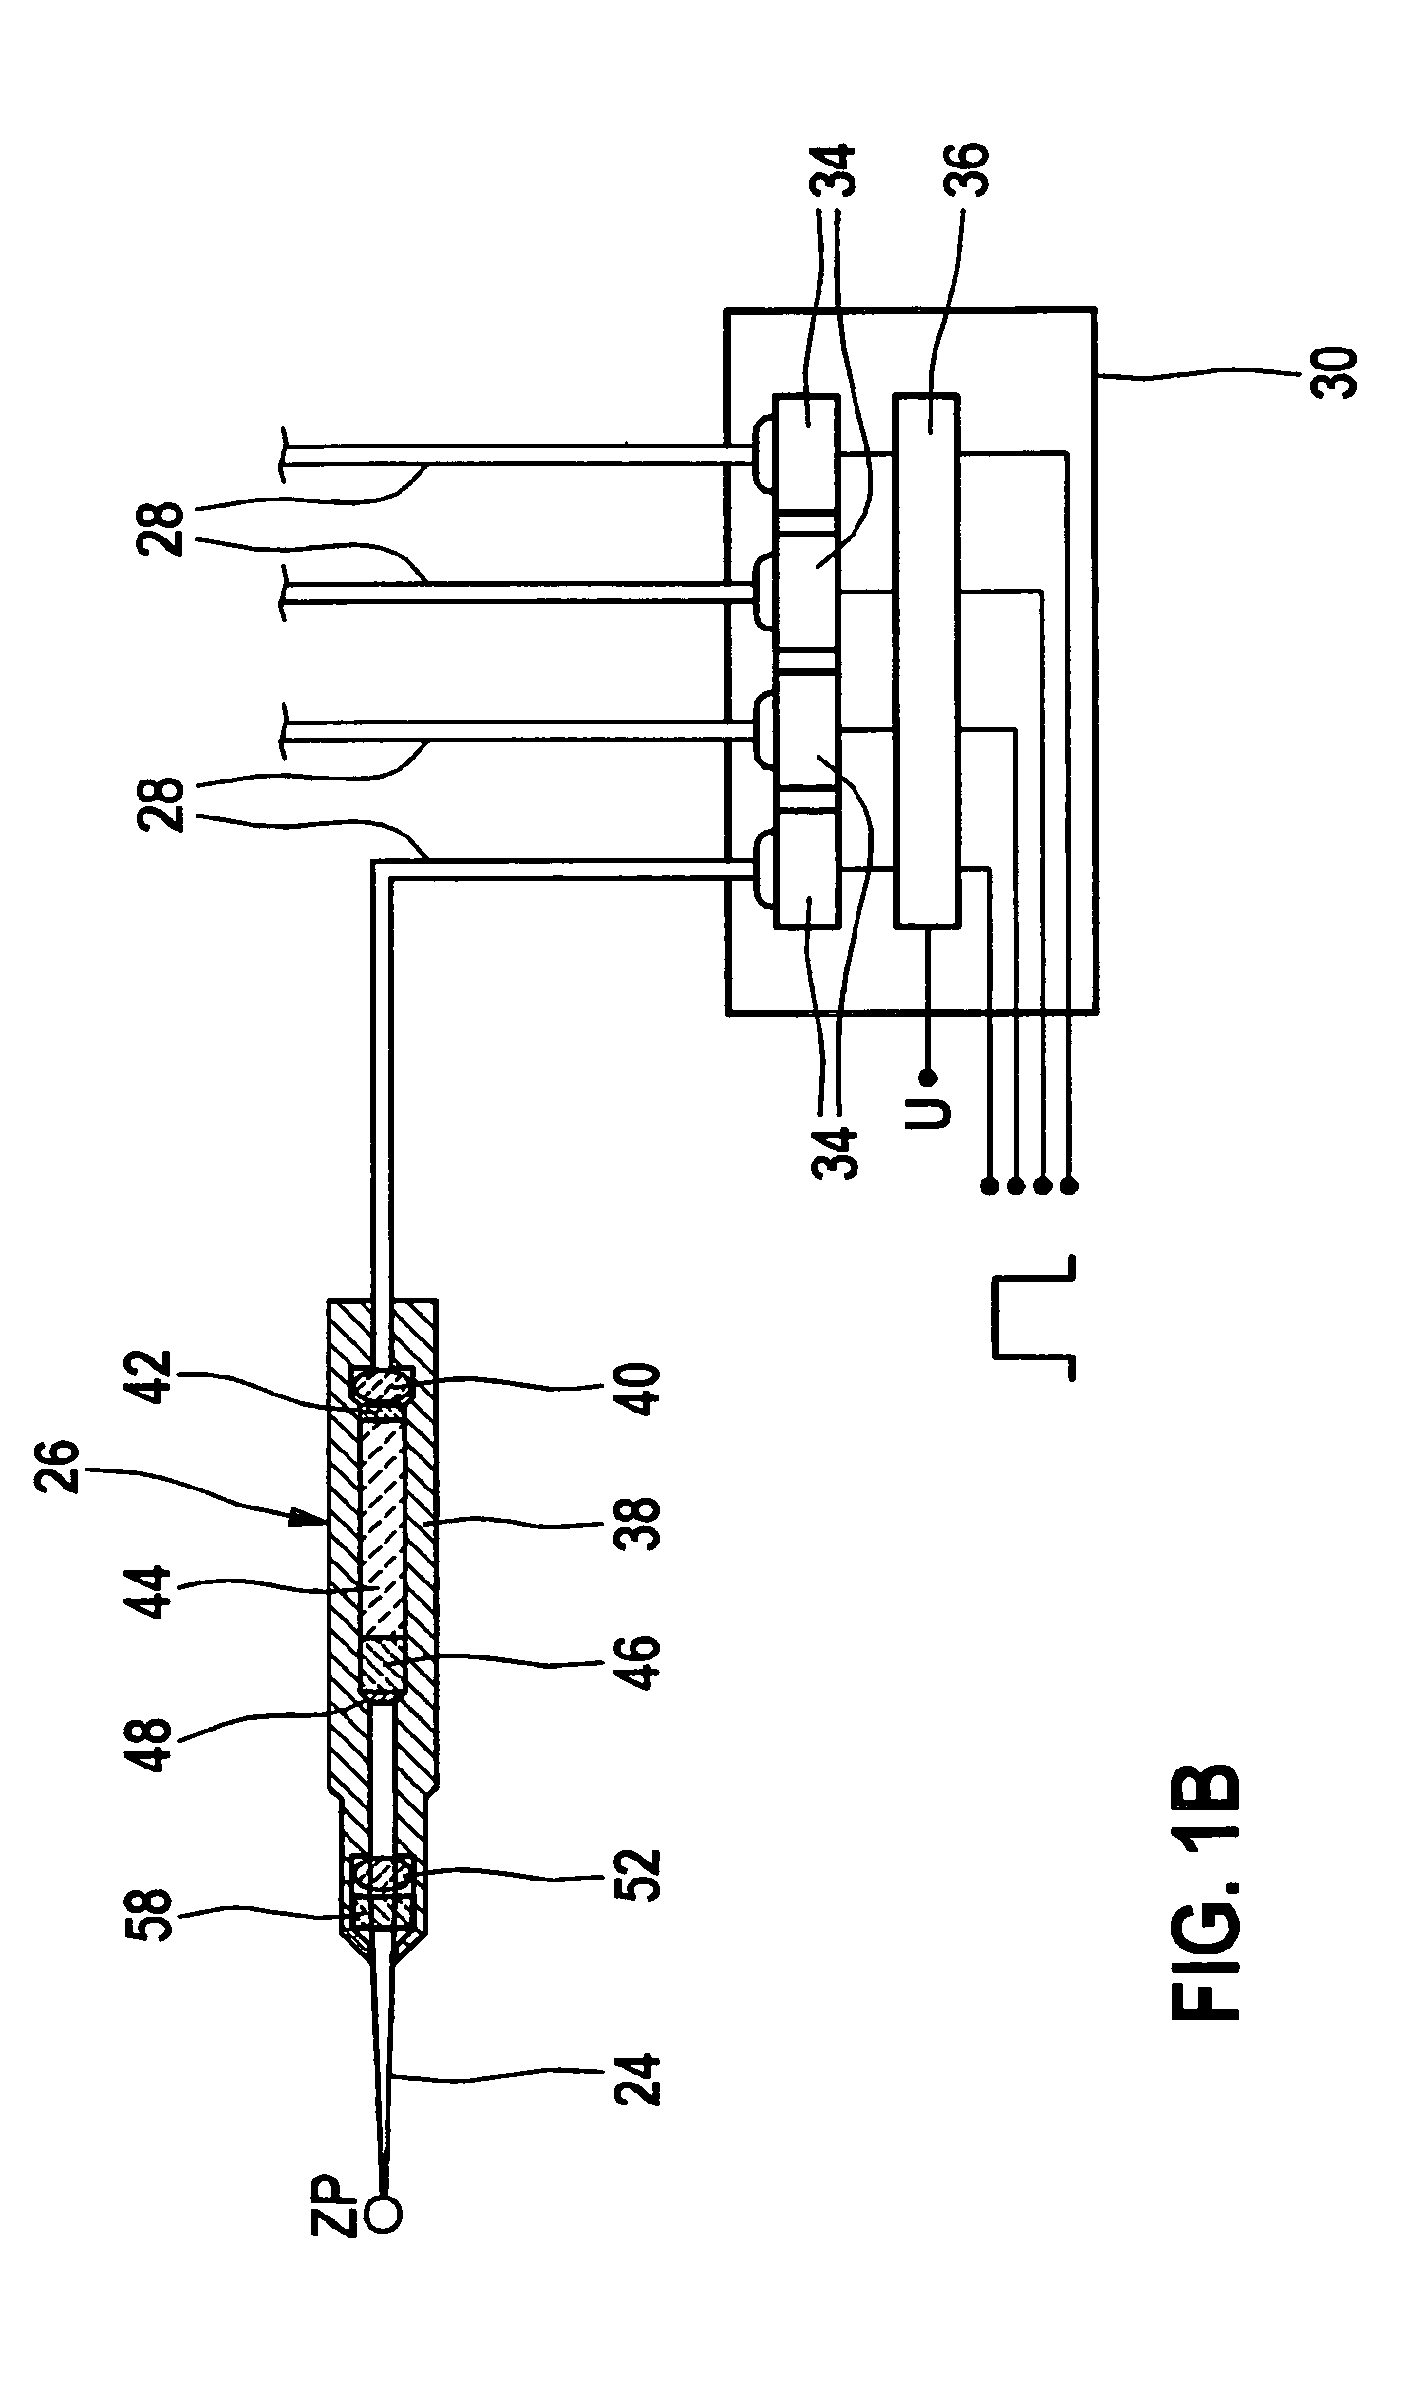 Fiber optic connector system